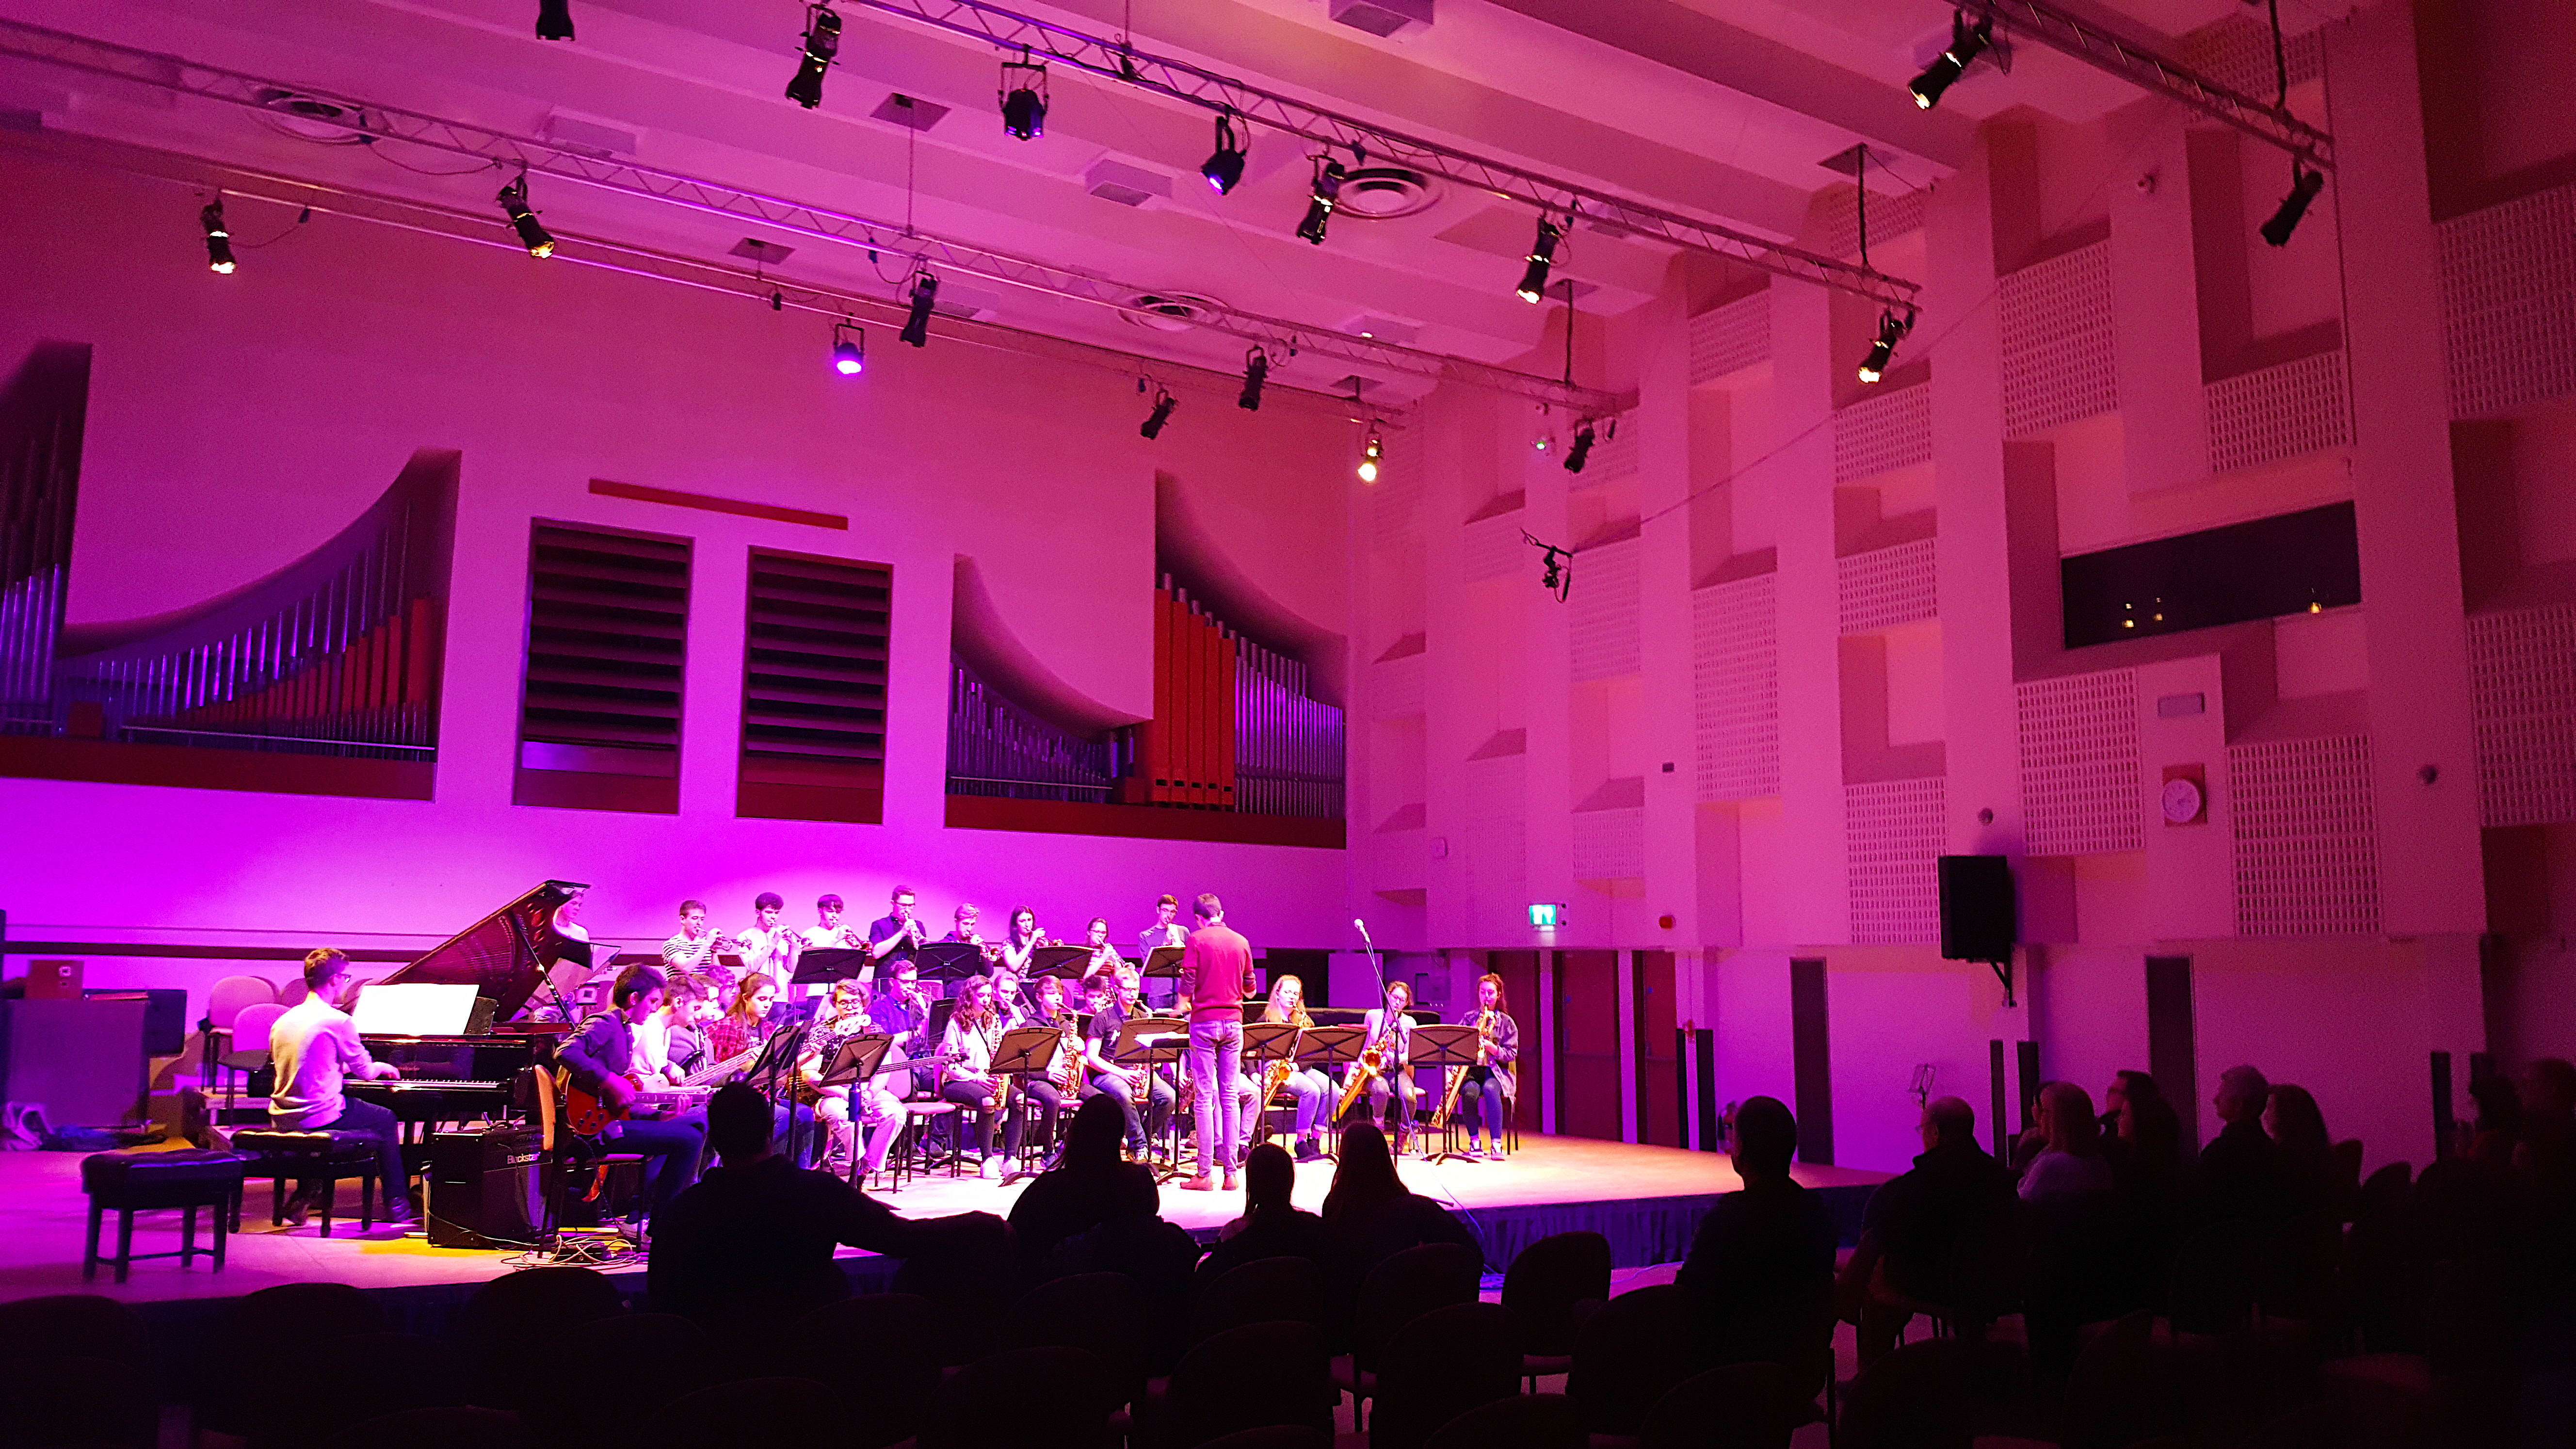 Concert at Cardiff University School of Music